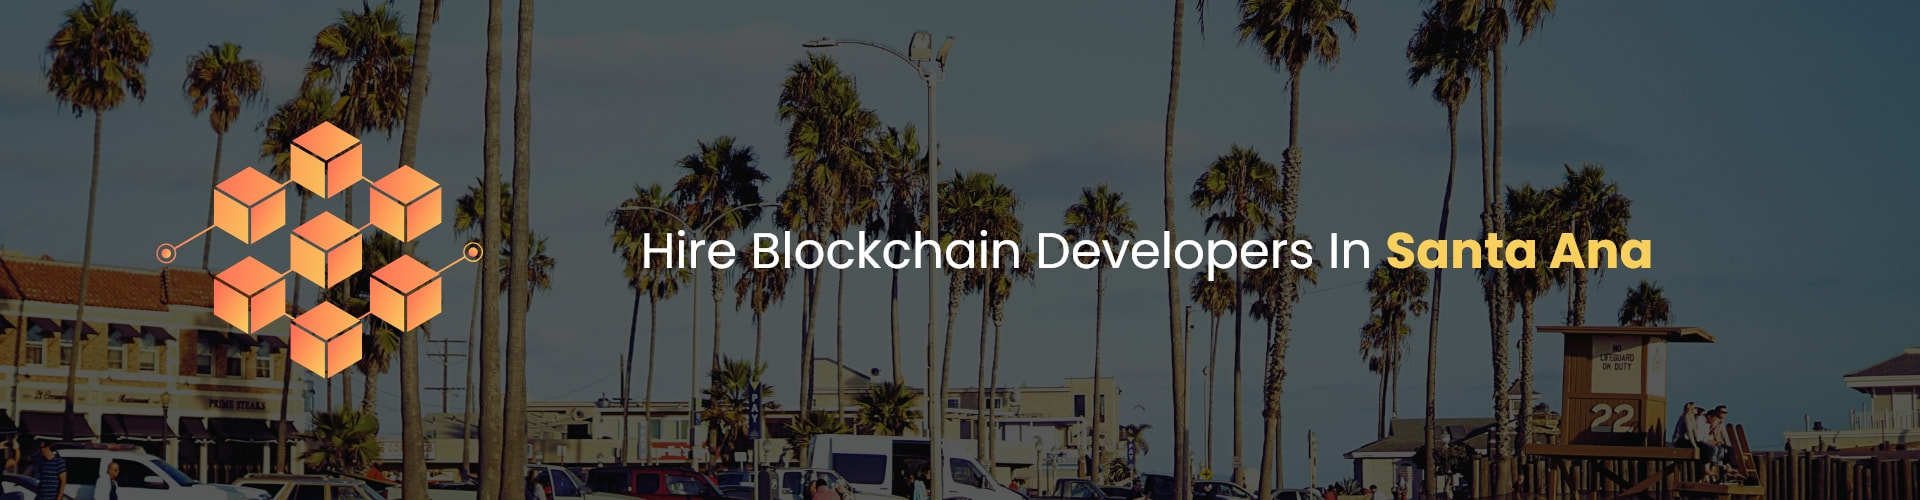 hire blockchain developers in santa ana